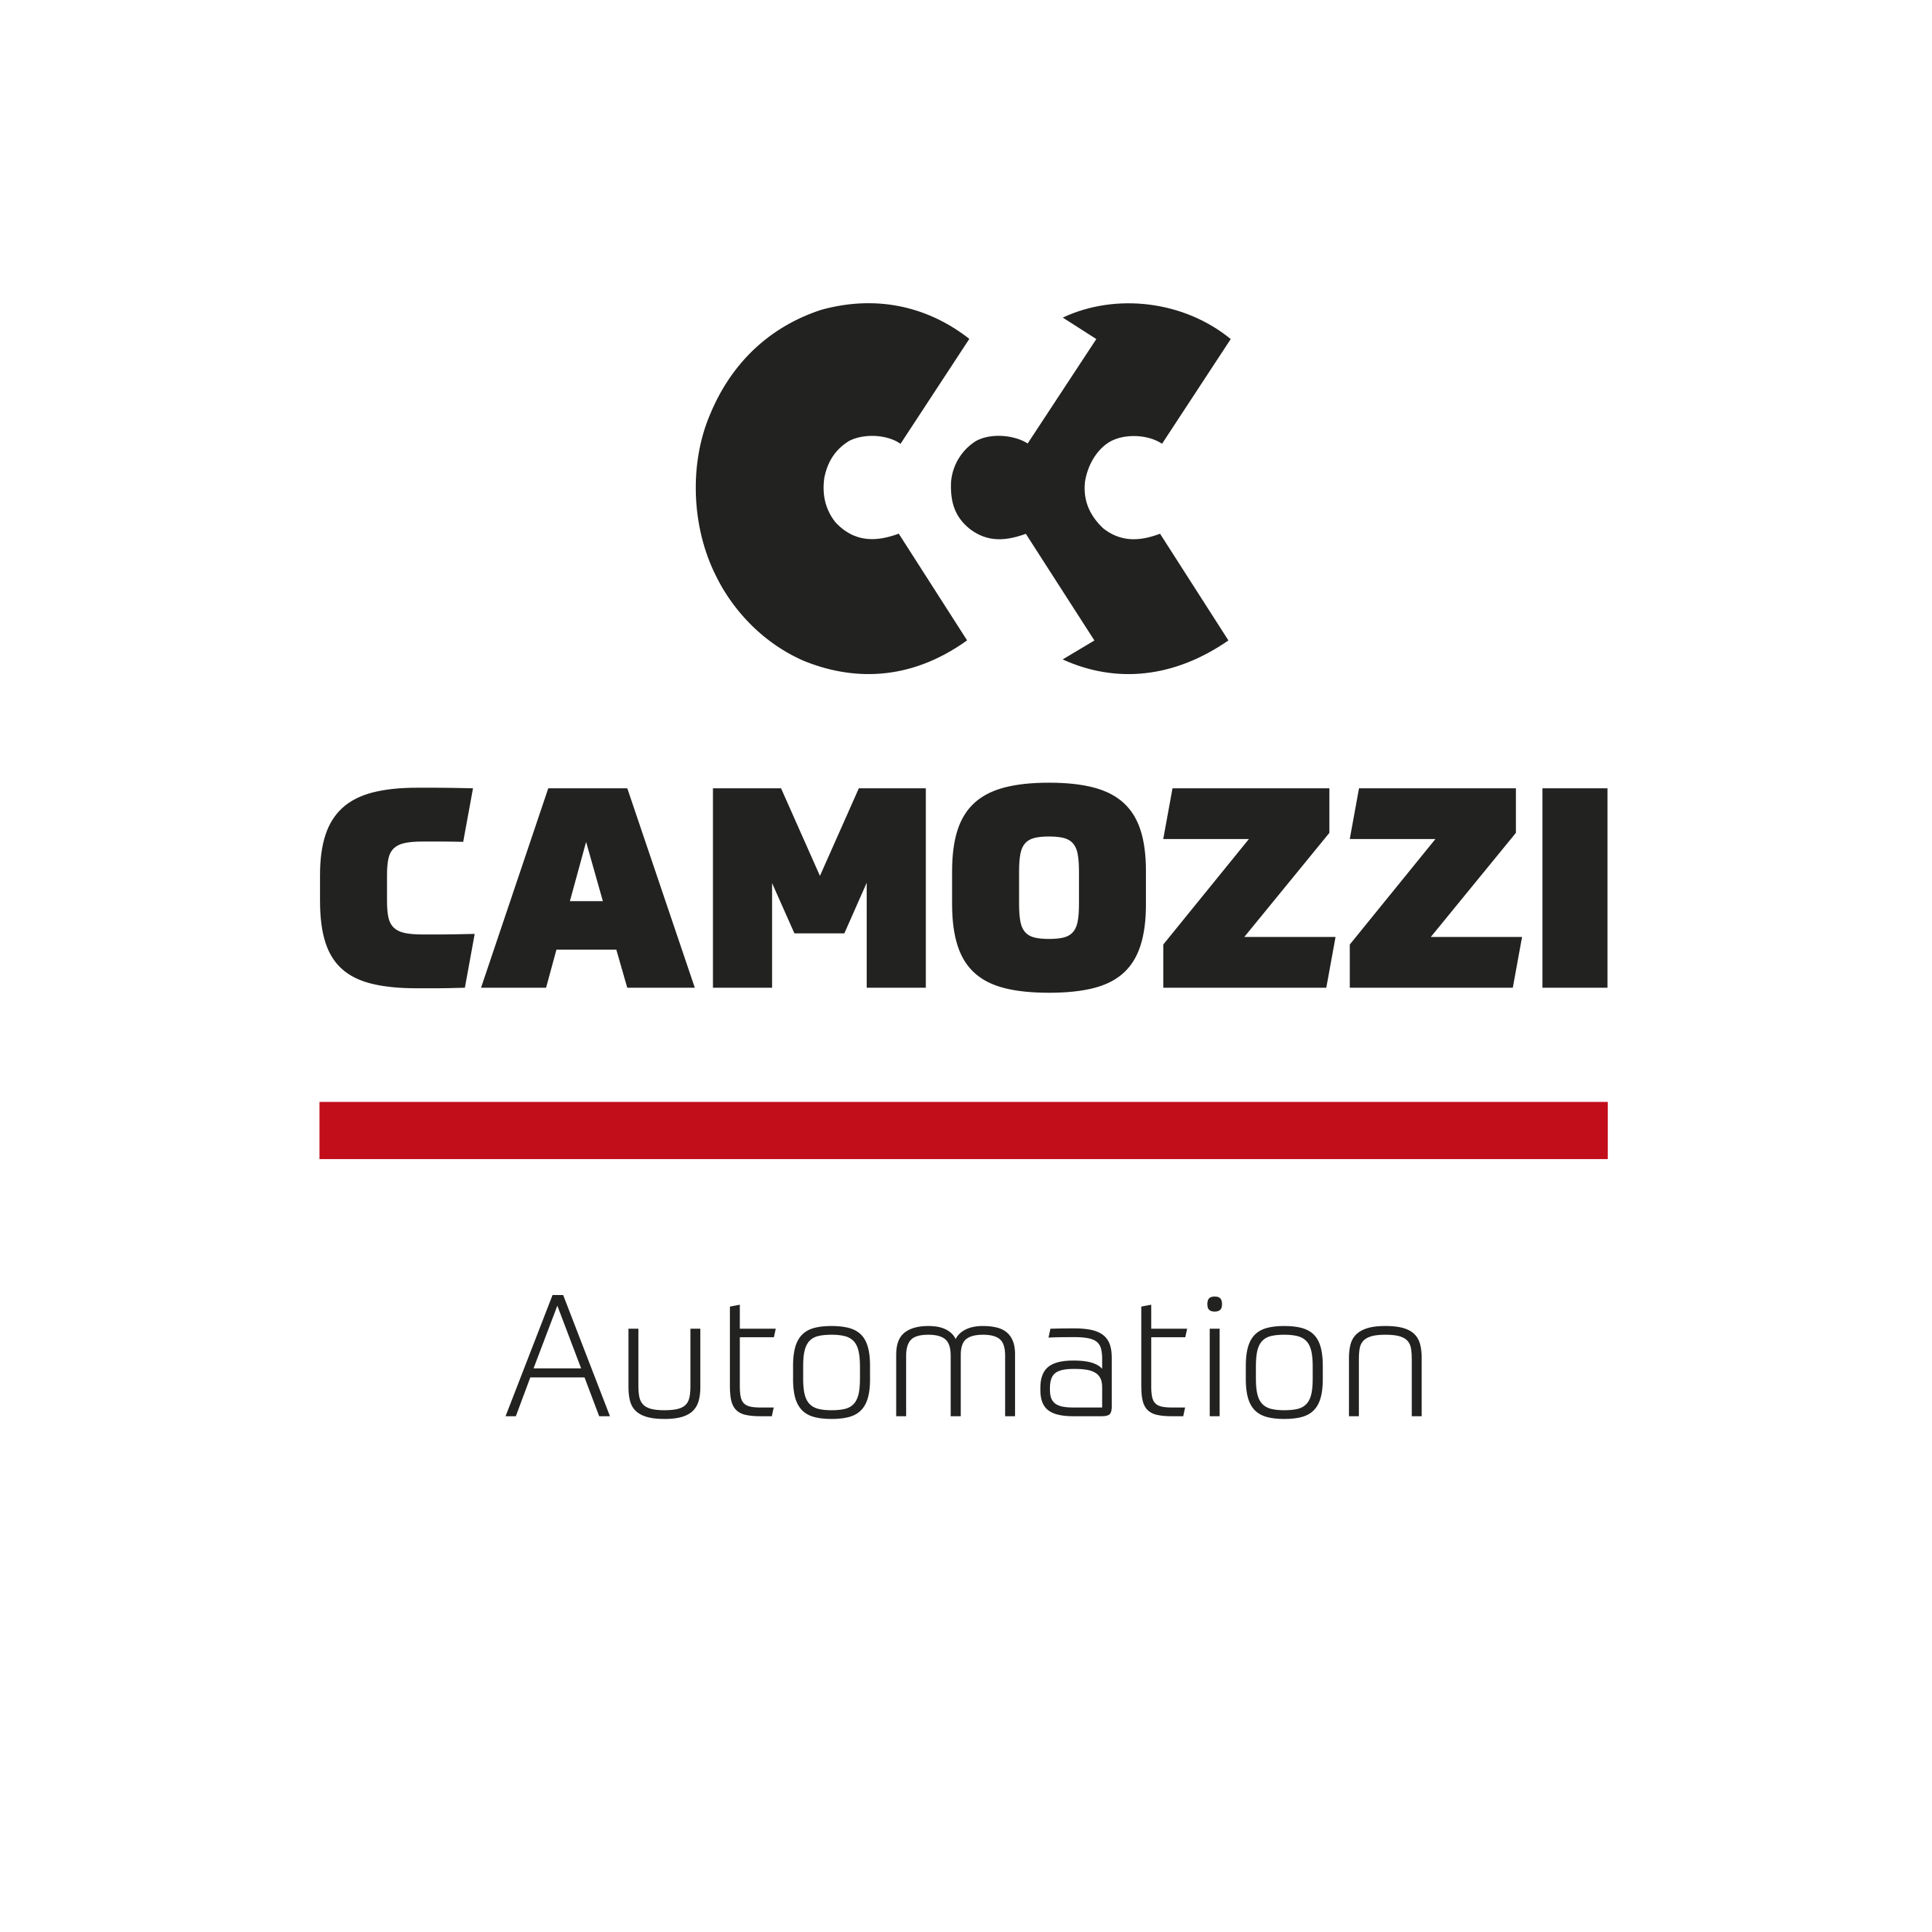 Camozzi Automation Ltd